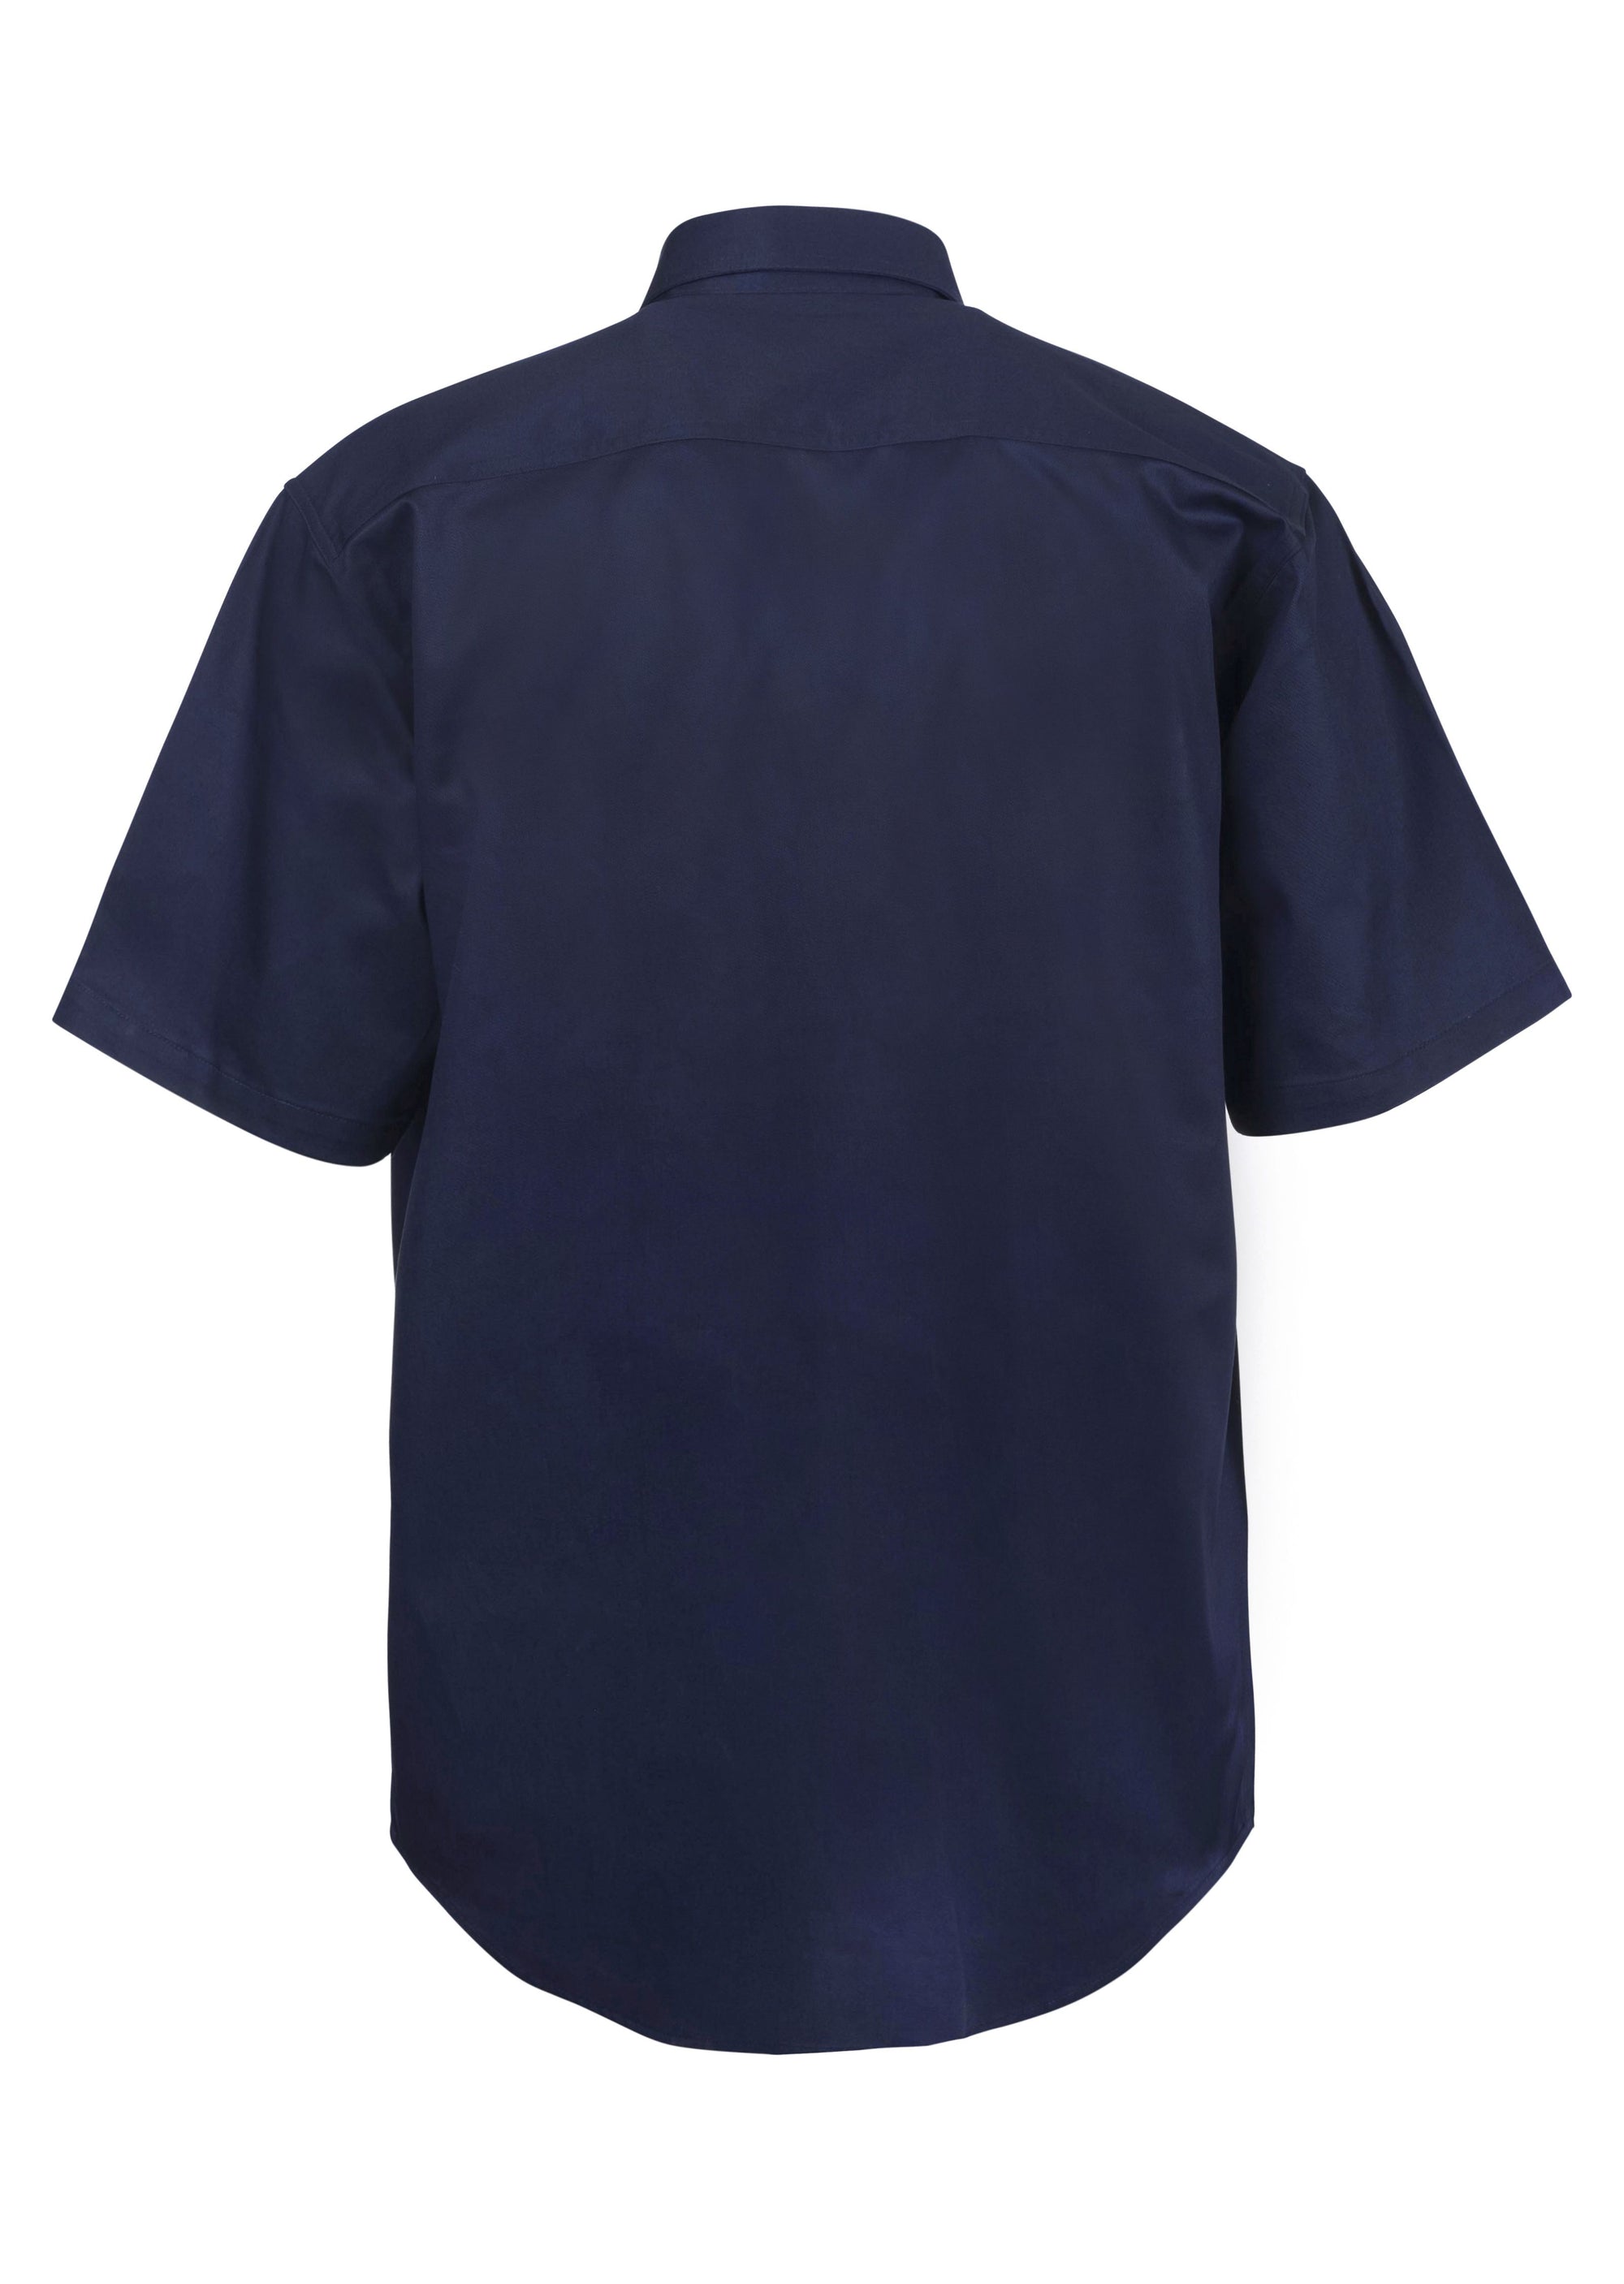 WorkCraft Mens Khaki Drill Shirt ss 190g 2xl